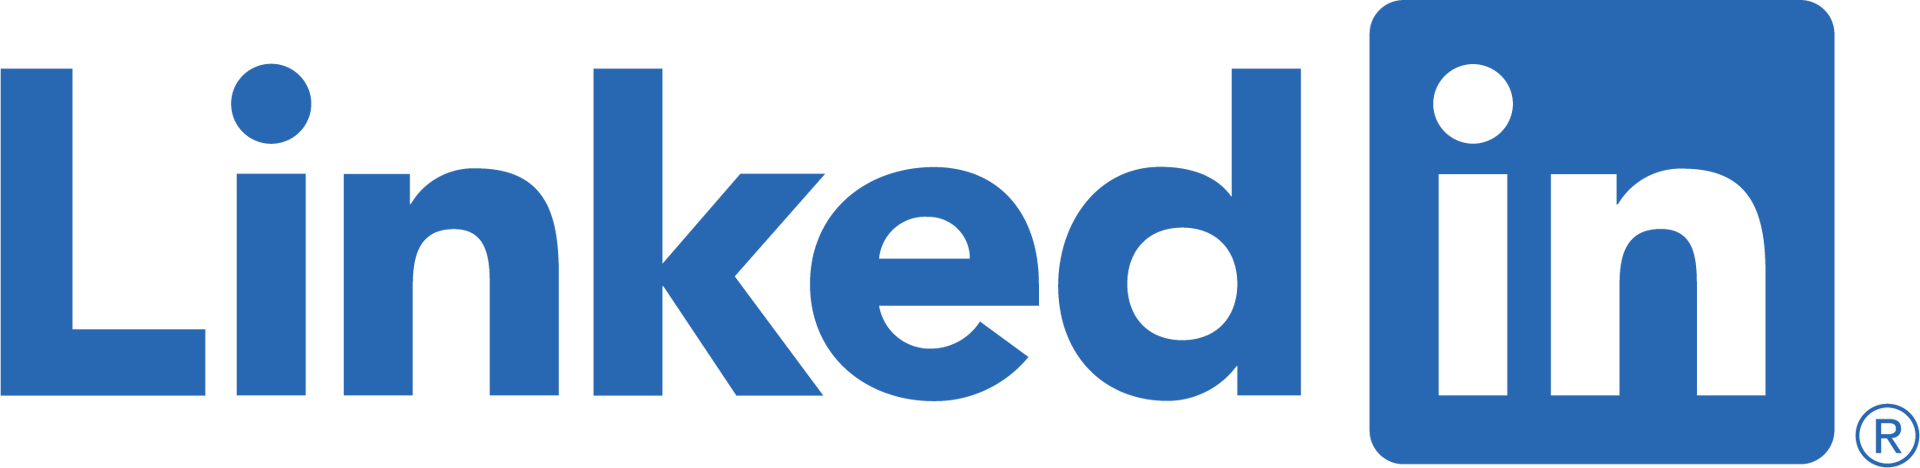 LinkedIn-logo-blue